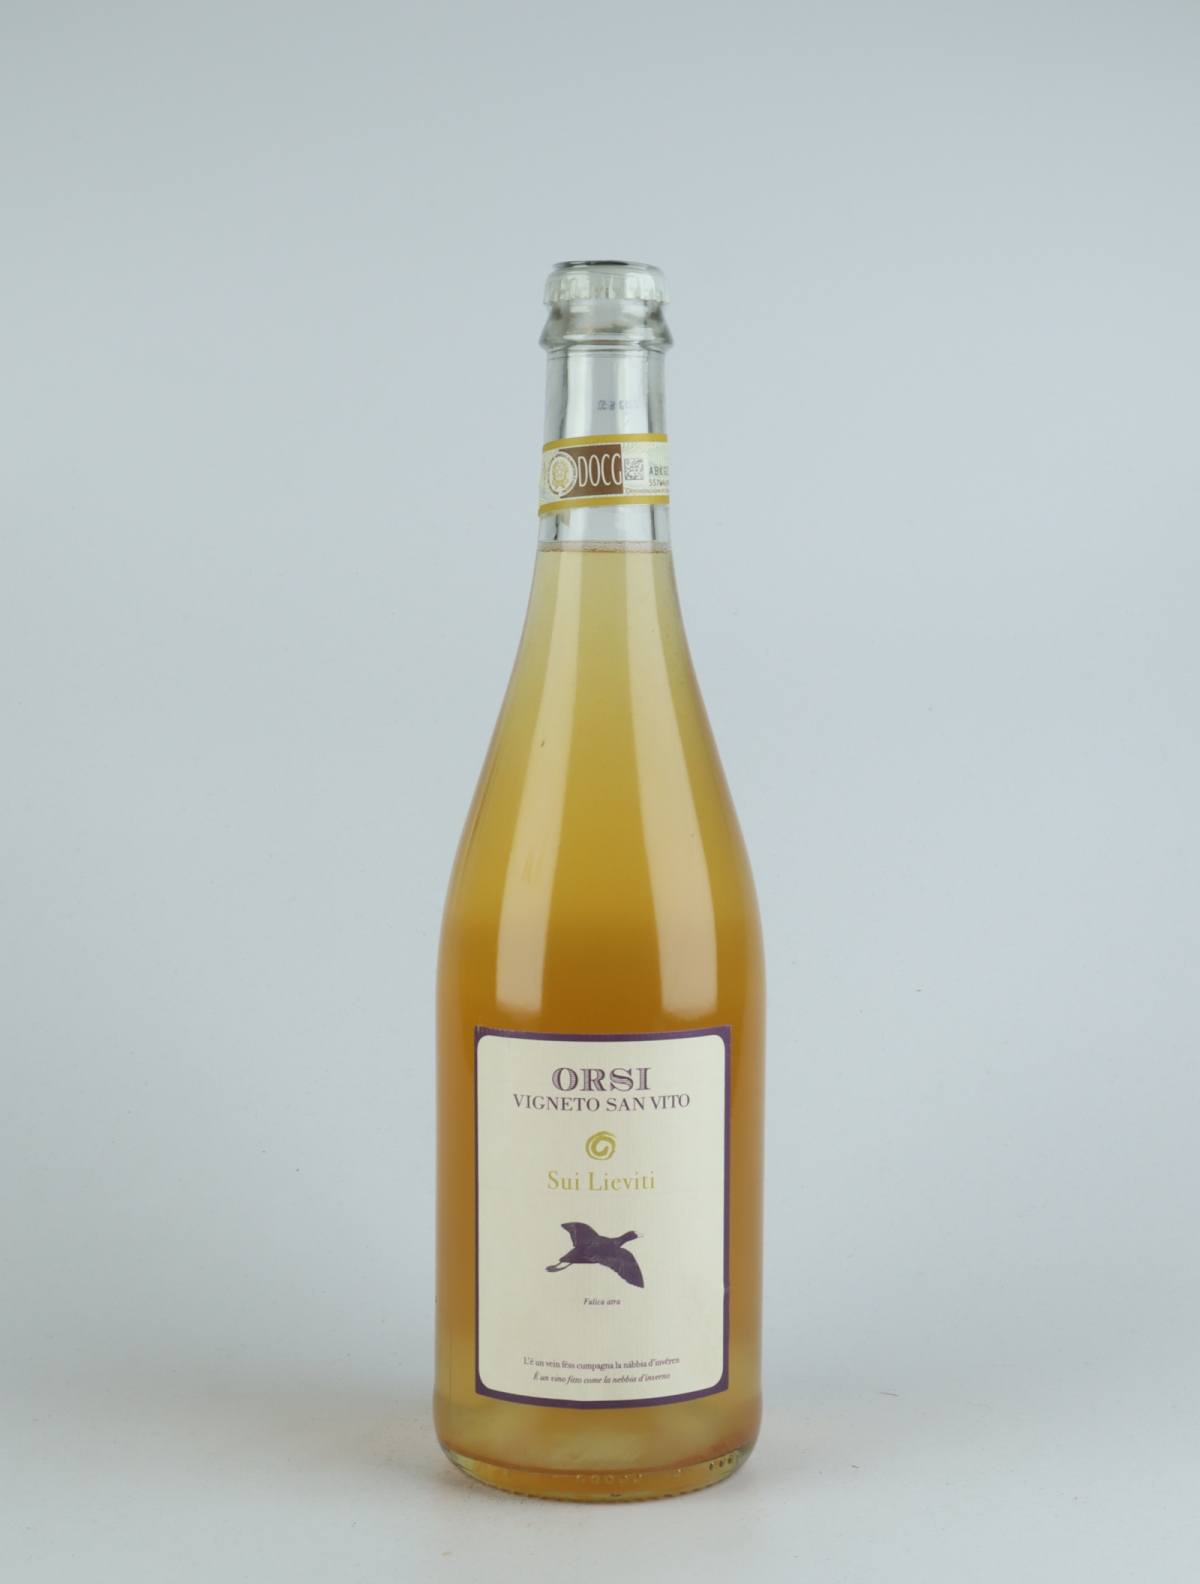 A bottle 2018 Sui Lieviti Sparkling from Orsi - San Vito, Emilia-Romagna in Italy